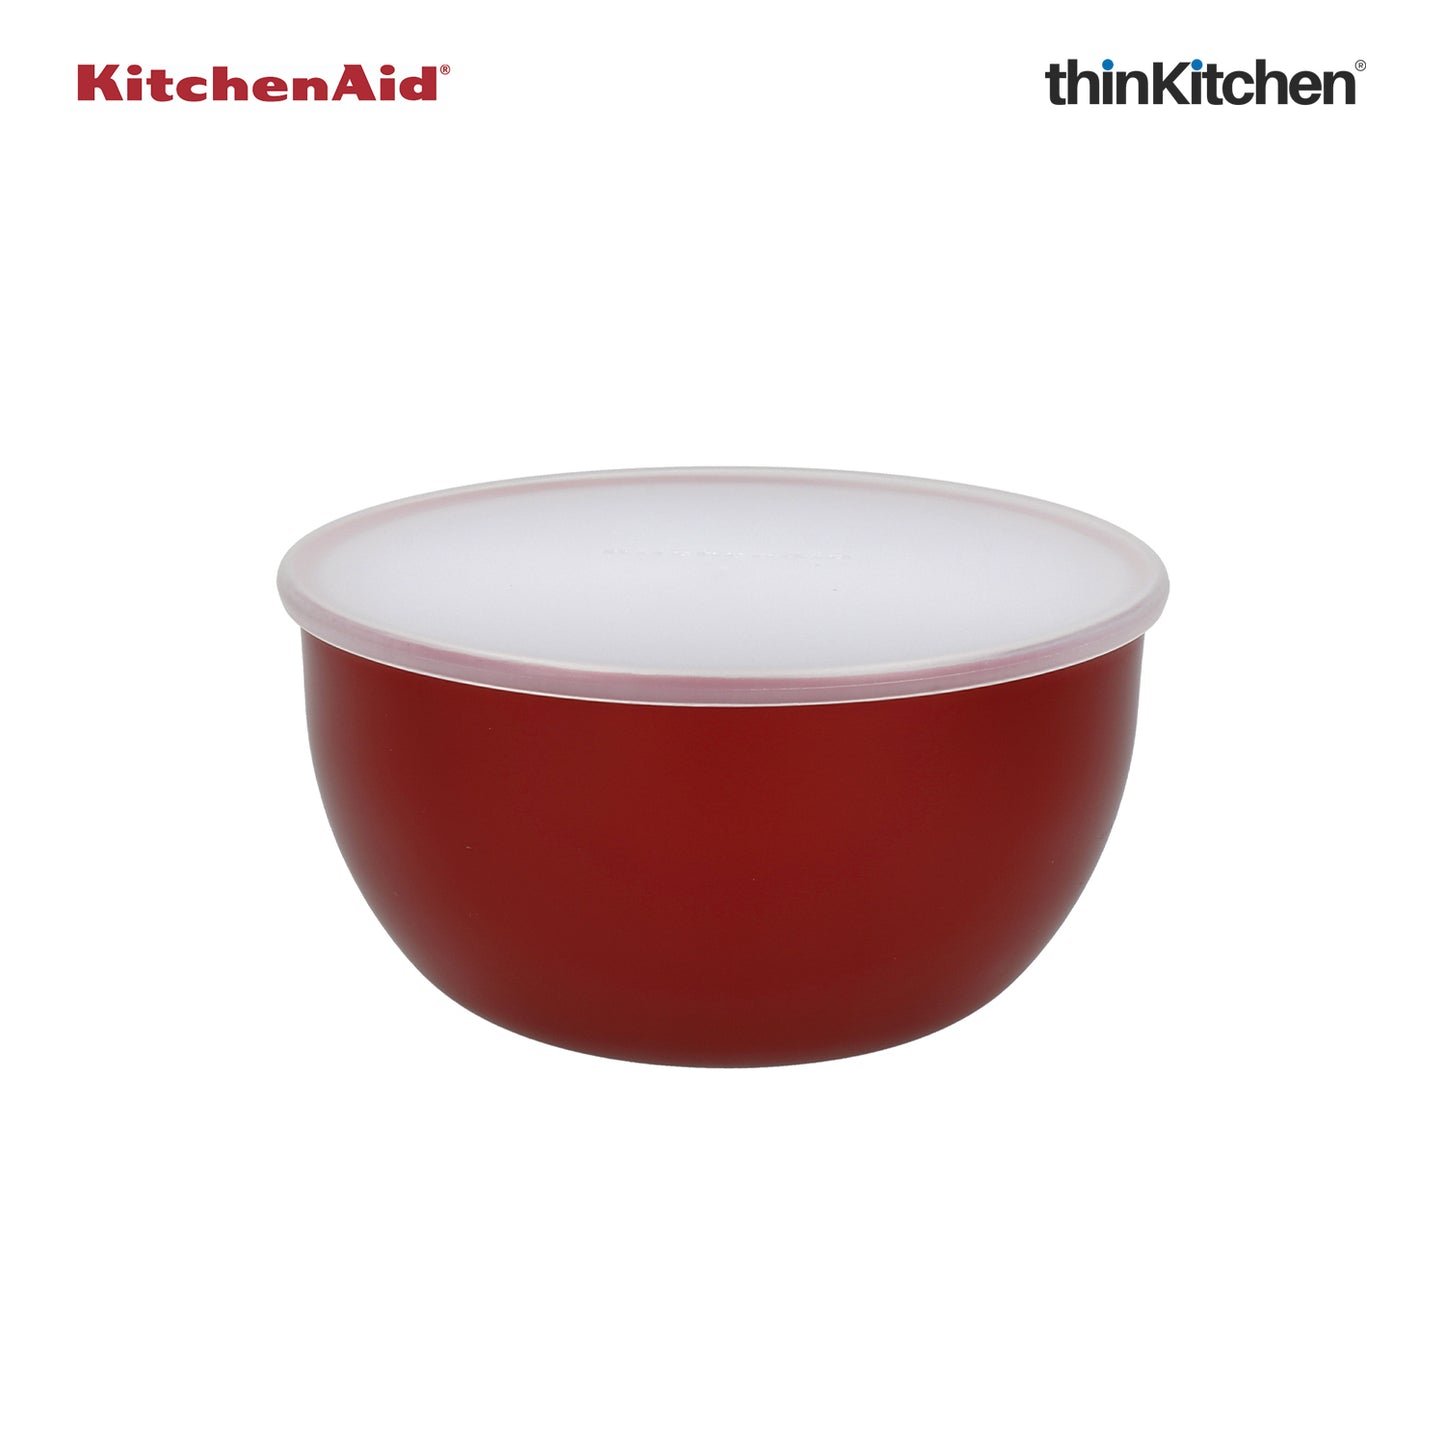 Kitchenaid 4 Pc Prep Bowls With Lid Empire Red 4 Pc Set